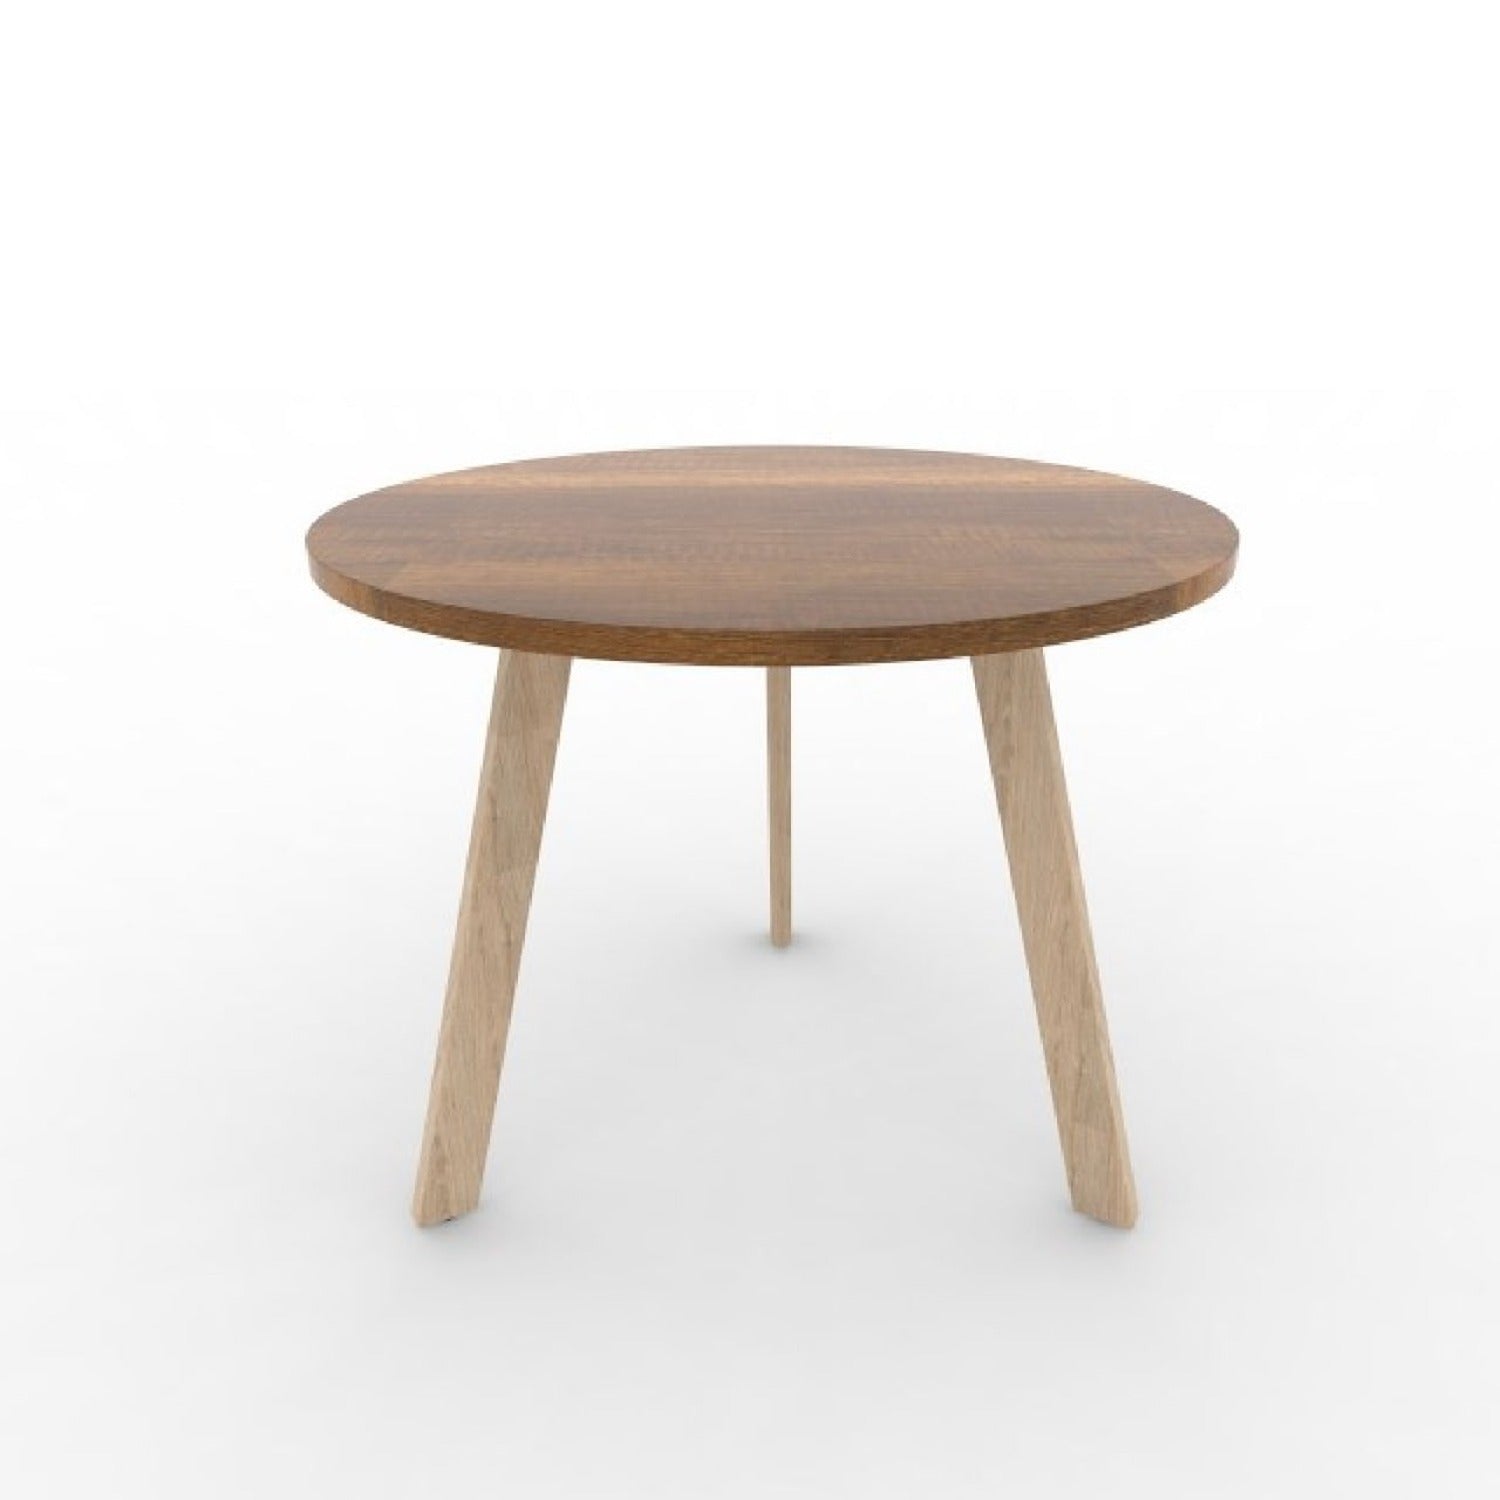  LAKIQ Modem - Mesa auxiliar de madera maciza, mesa